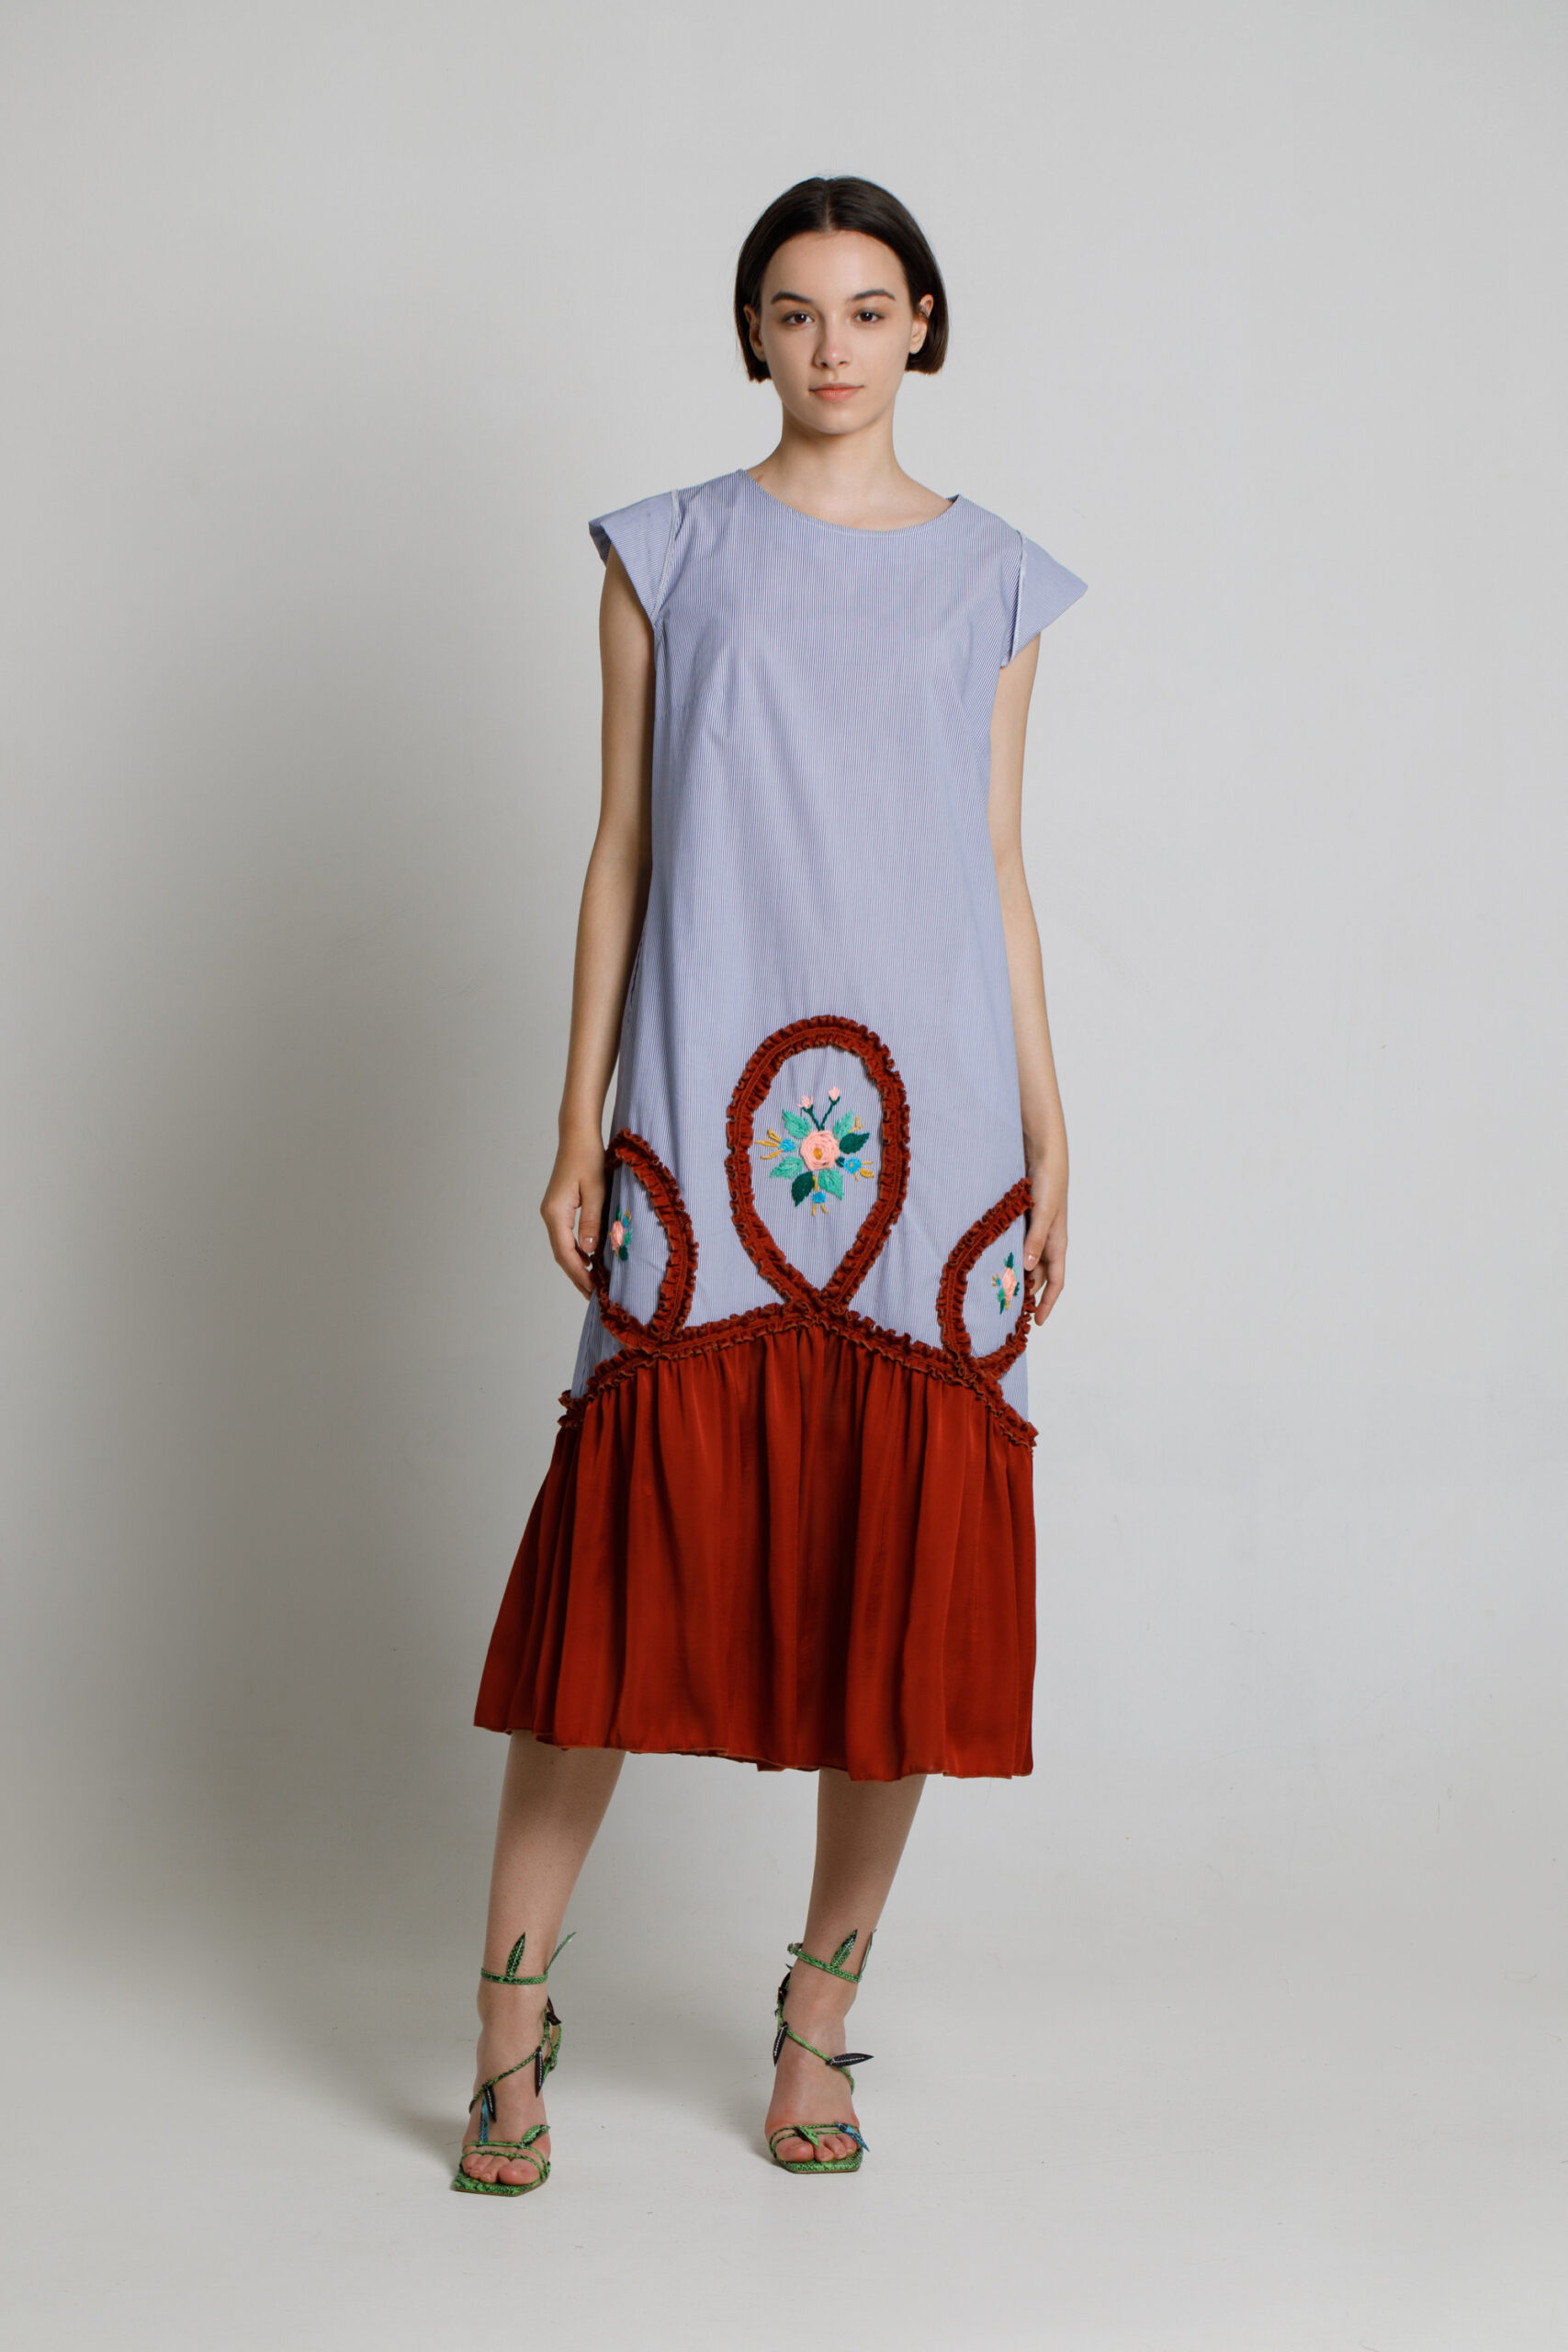 CELLA casual poplin and satin dress. Natural fabrics, original design, handmade embroidery